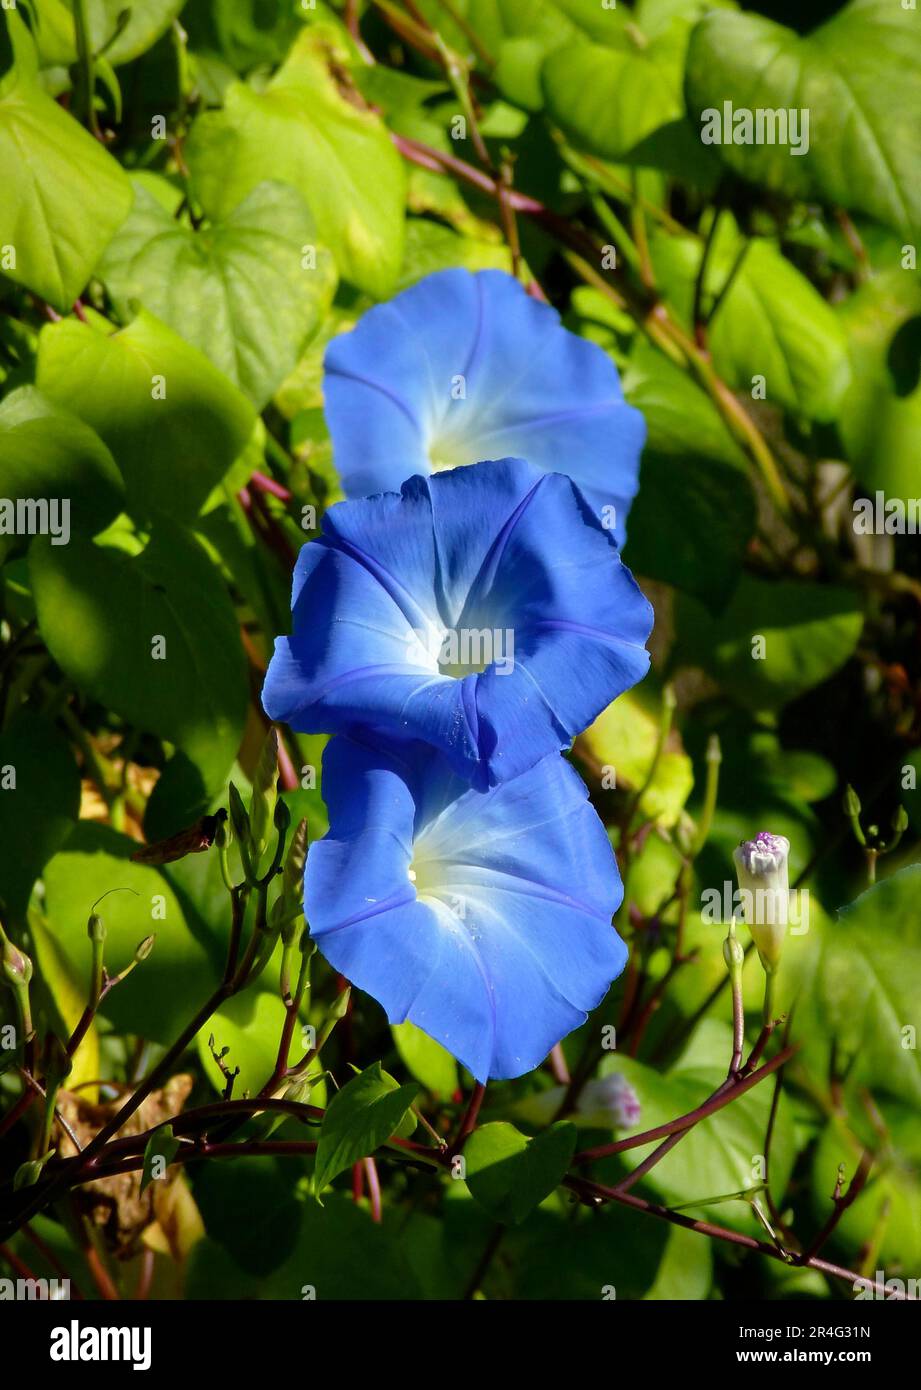 Blue morning glory flowering in the garden, Ipomoea violacea Stock Photo